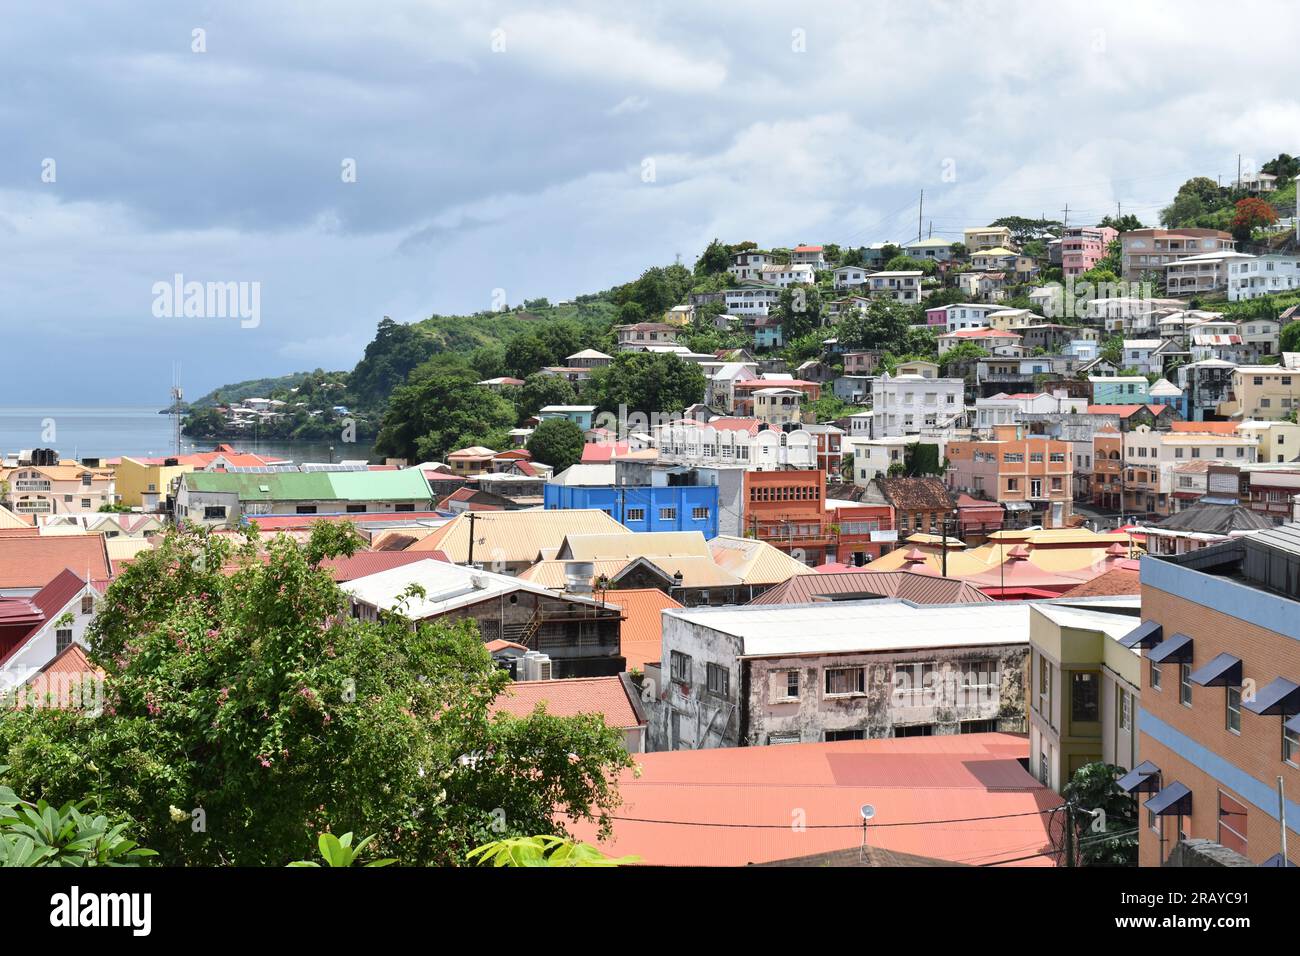 St. George's, Grenada- August 23, 2022- Stock Photo